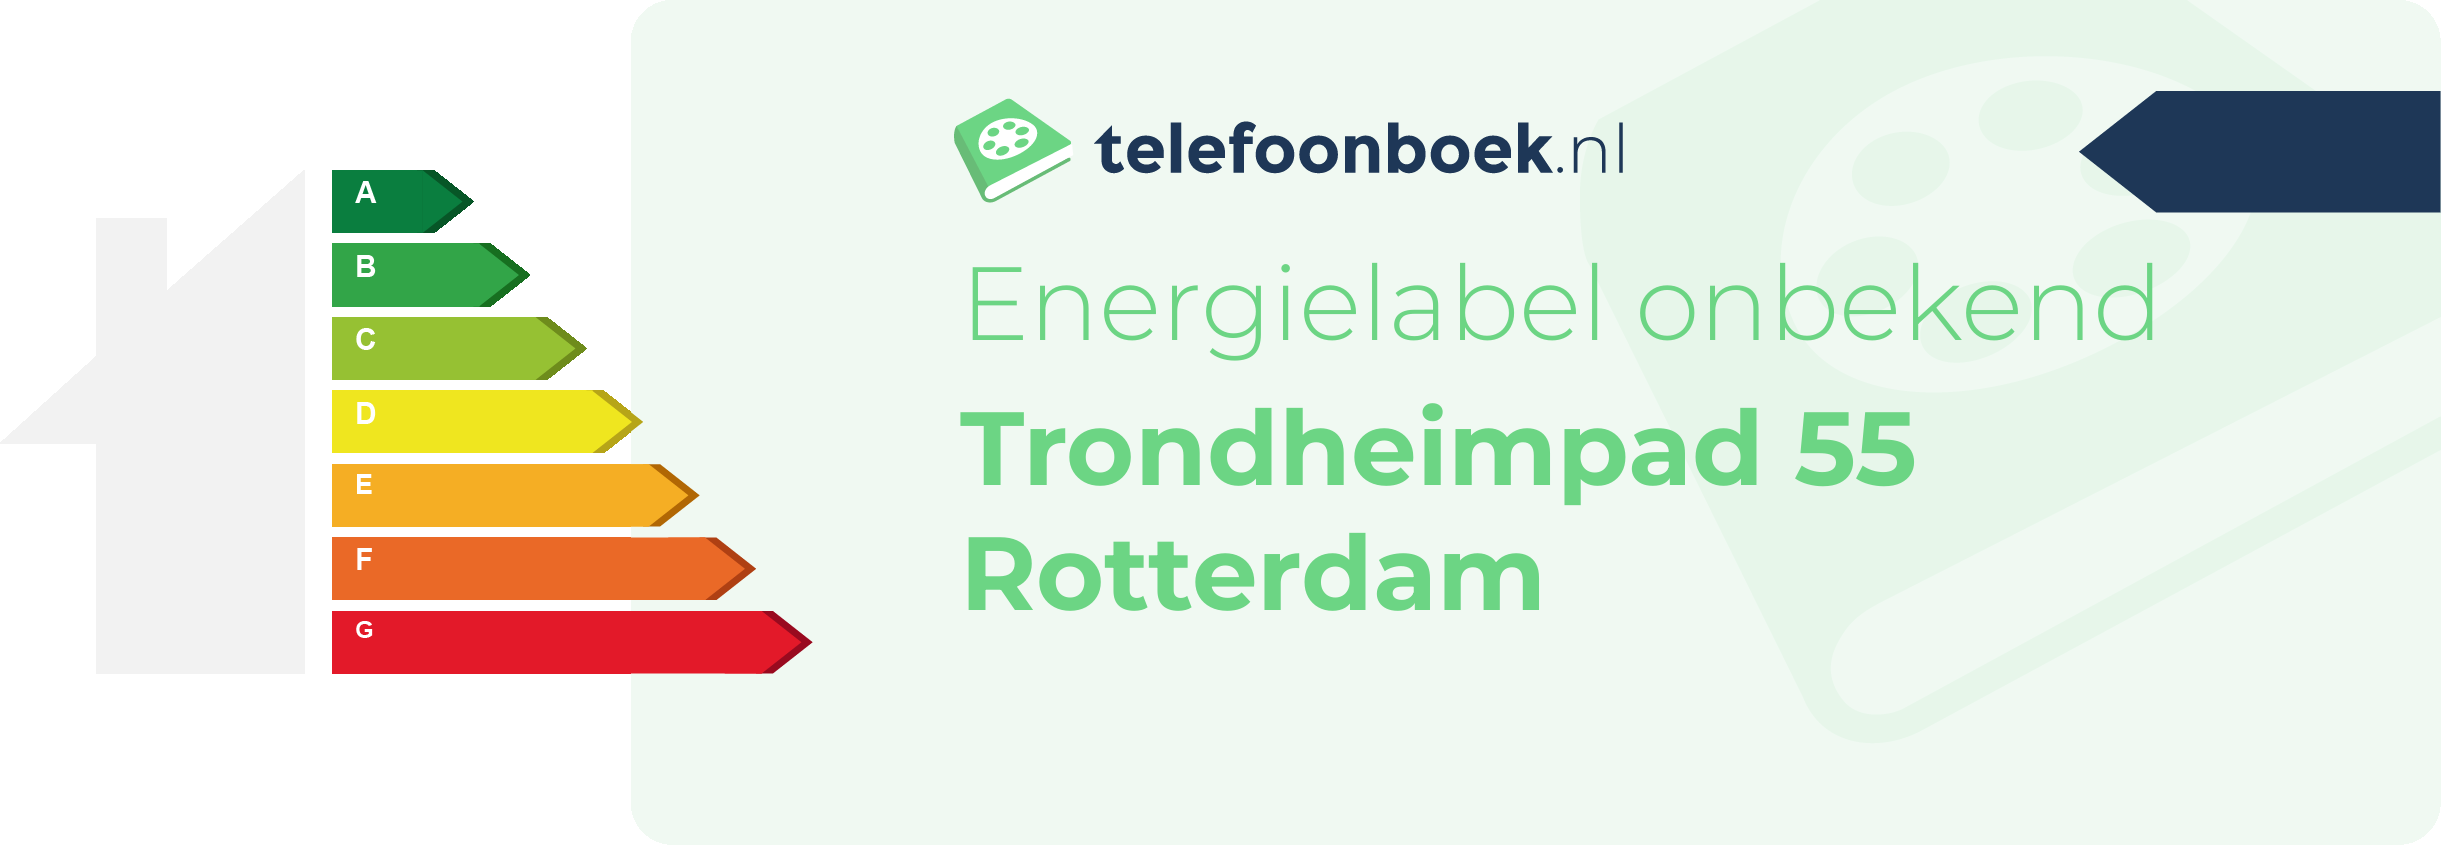 Energielabel Trondheimpad 55 Rotterdam